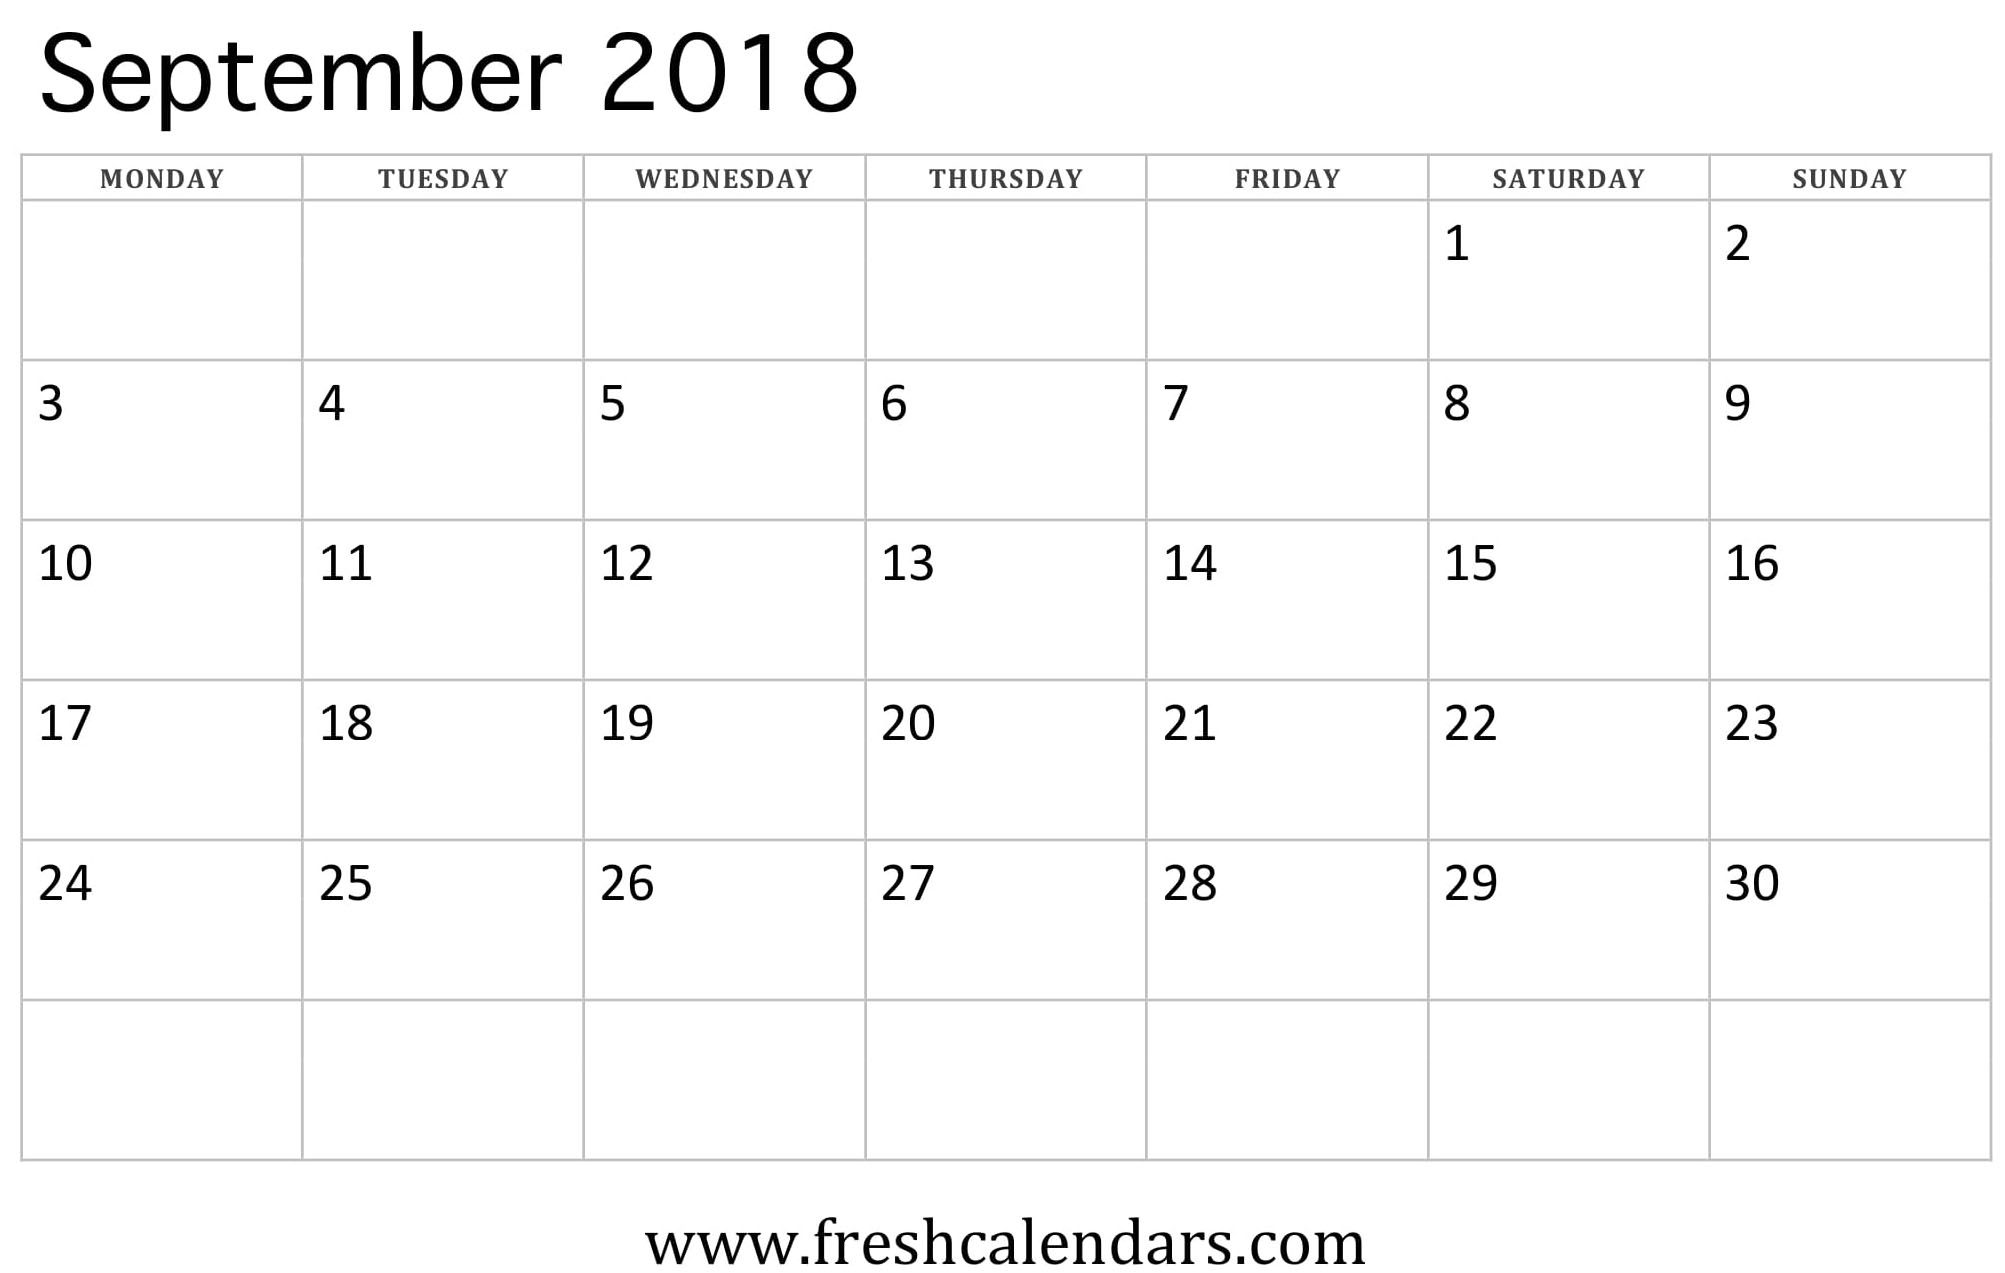 September 2018 Calendar (week starts on monday)